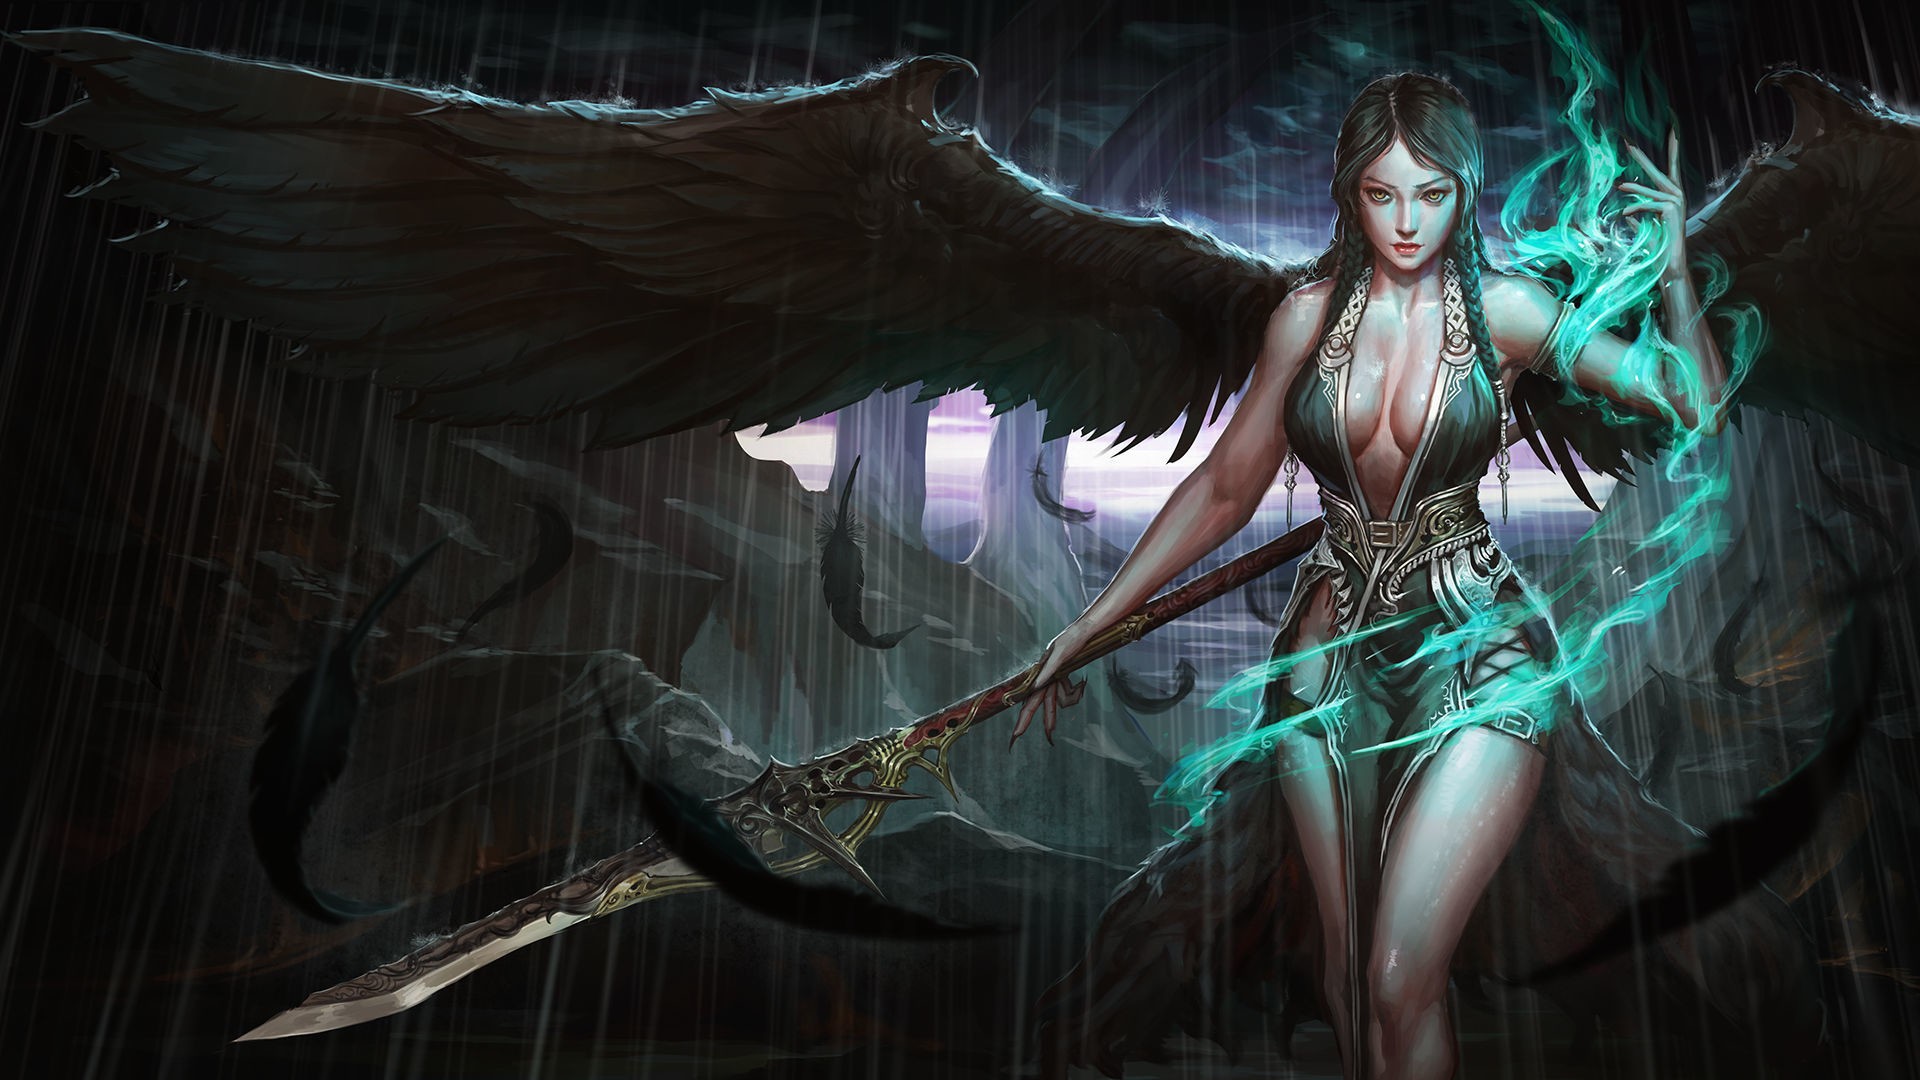 General 1920x1080 fantasy art fantasy girl Vampirdzhija Vjedogonia rain braids cyan wings feathers